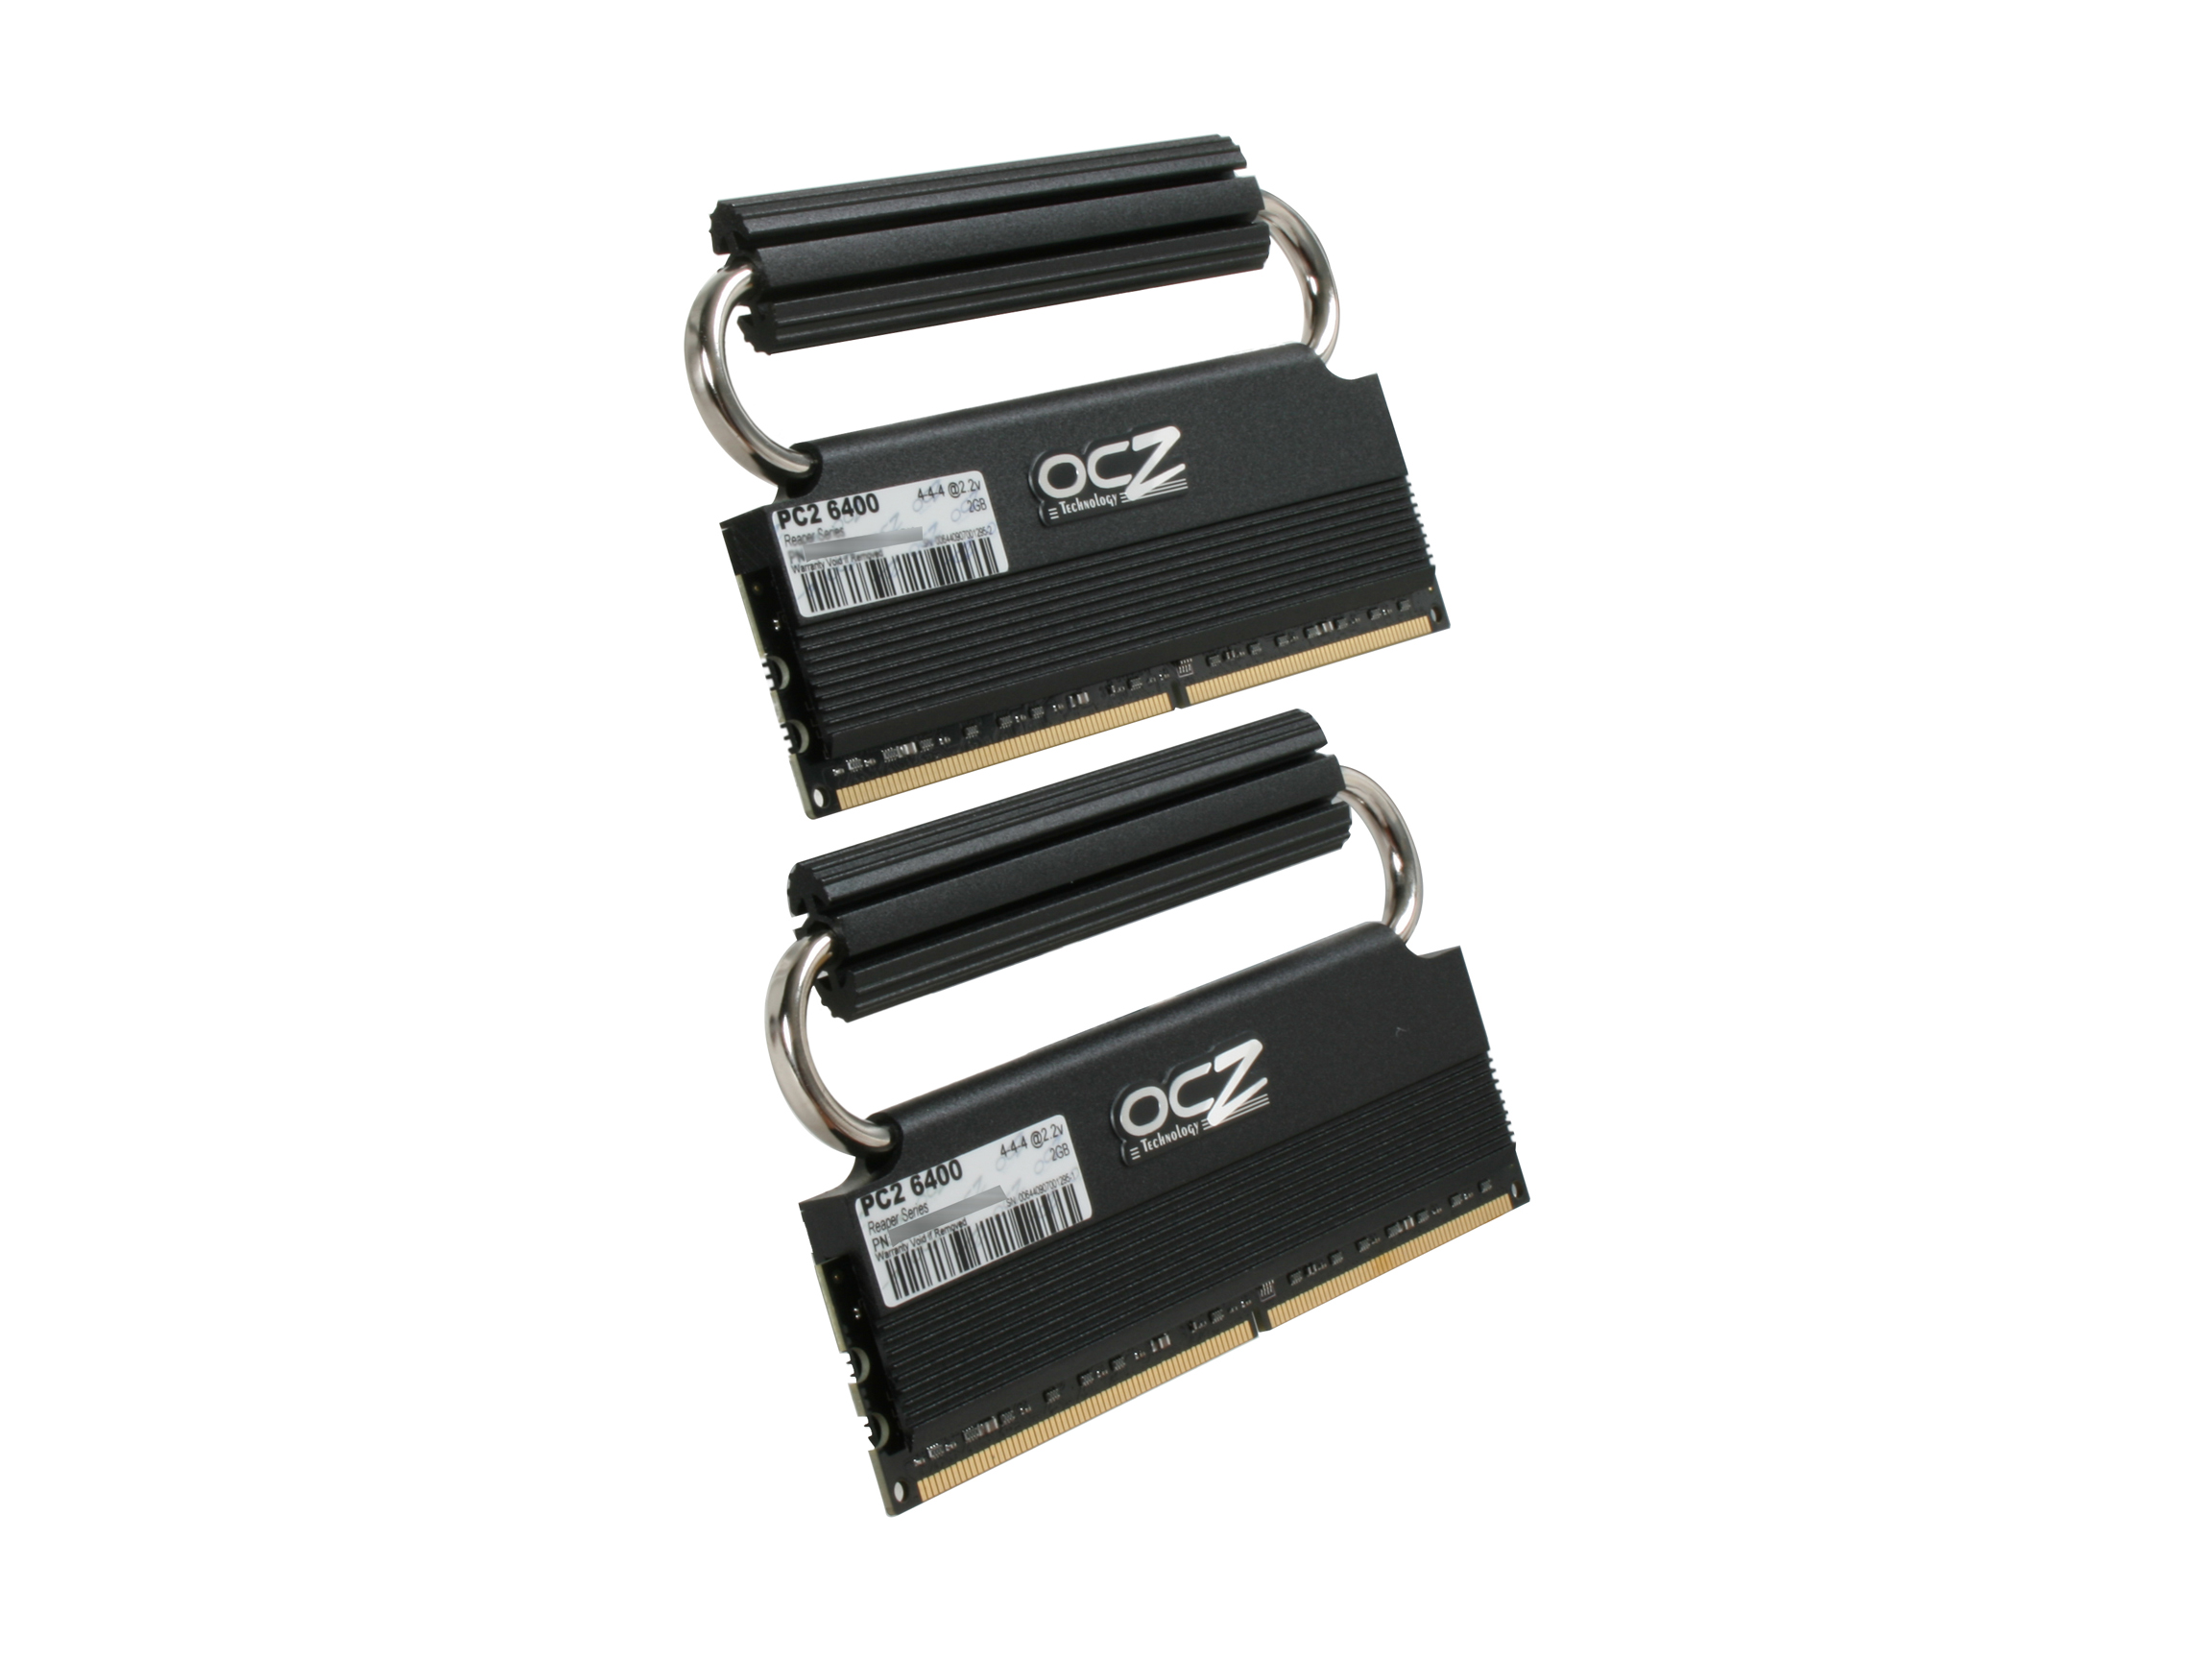 OCZ Reaper HPC Edition 4GB (2 x 2GB) 240 Pin DDR2 SDRAM DDR2 800 (PC2 6400) Dual Channel Kit Desktop Memory Model OCZ2RPR800C44GK